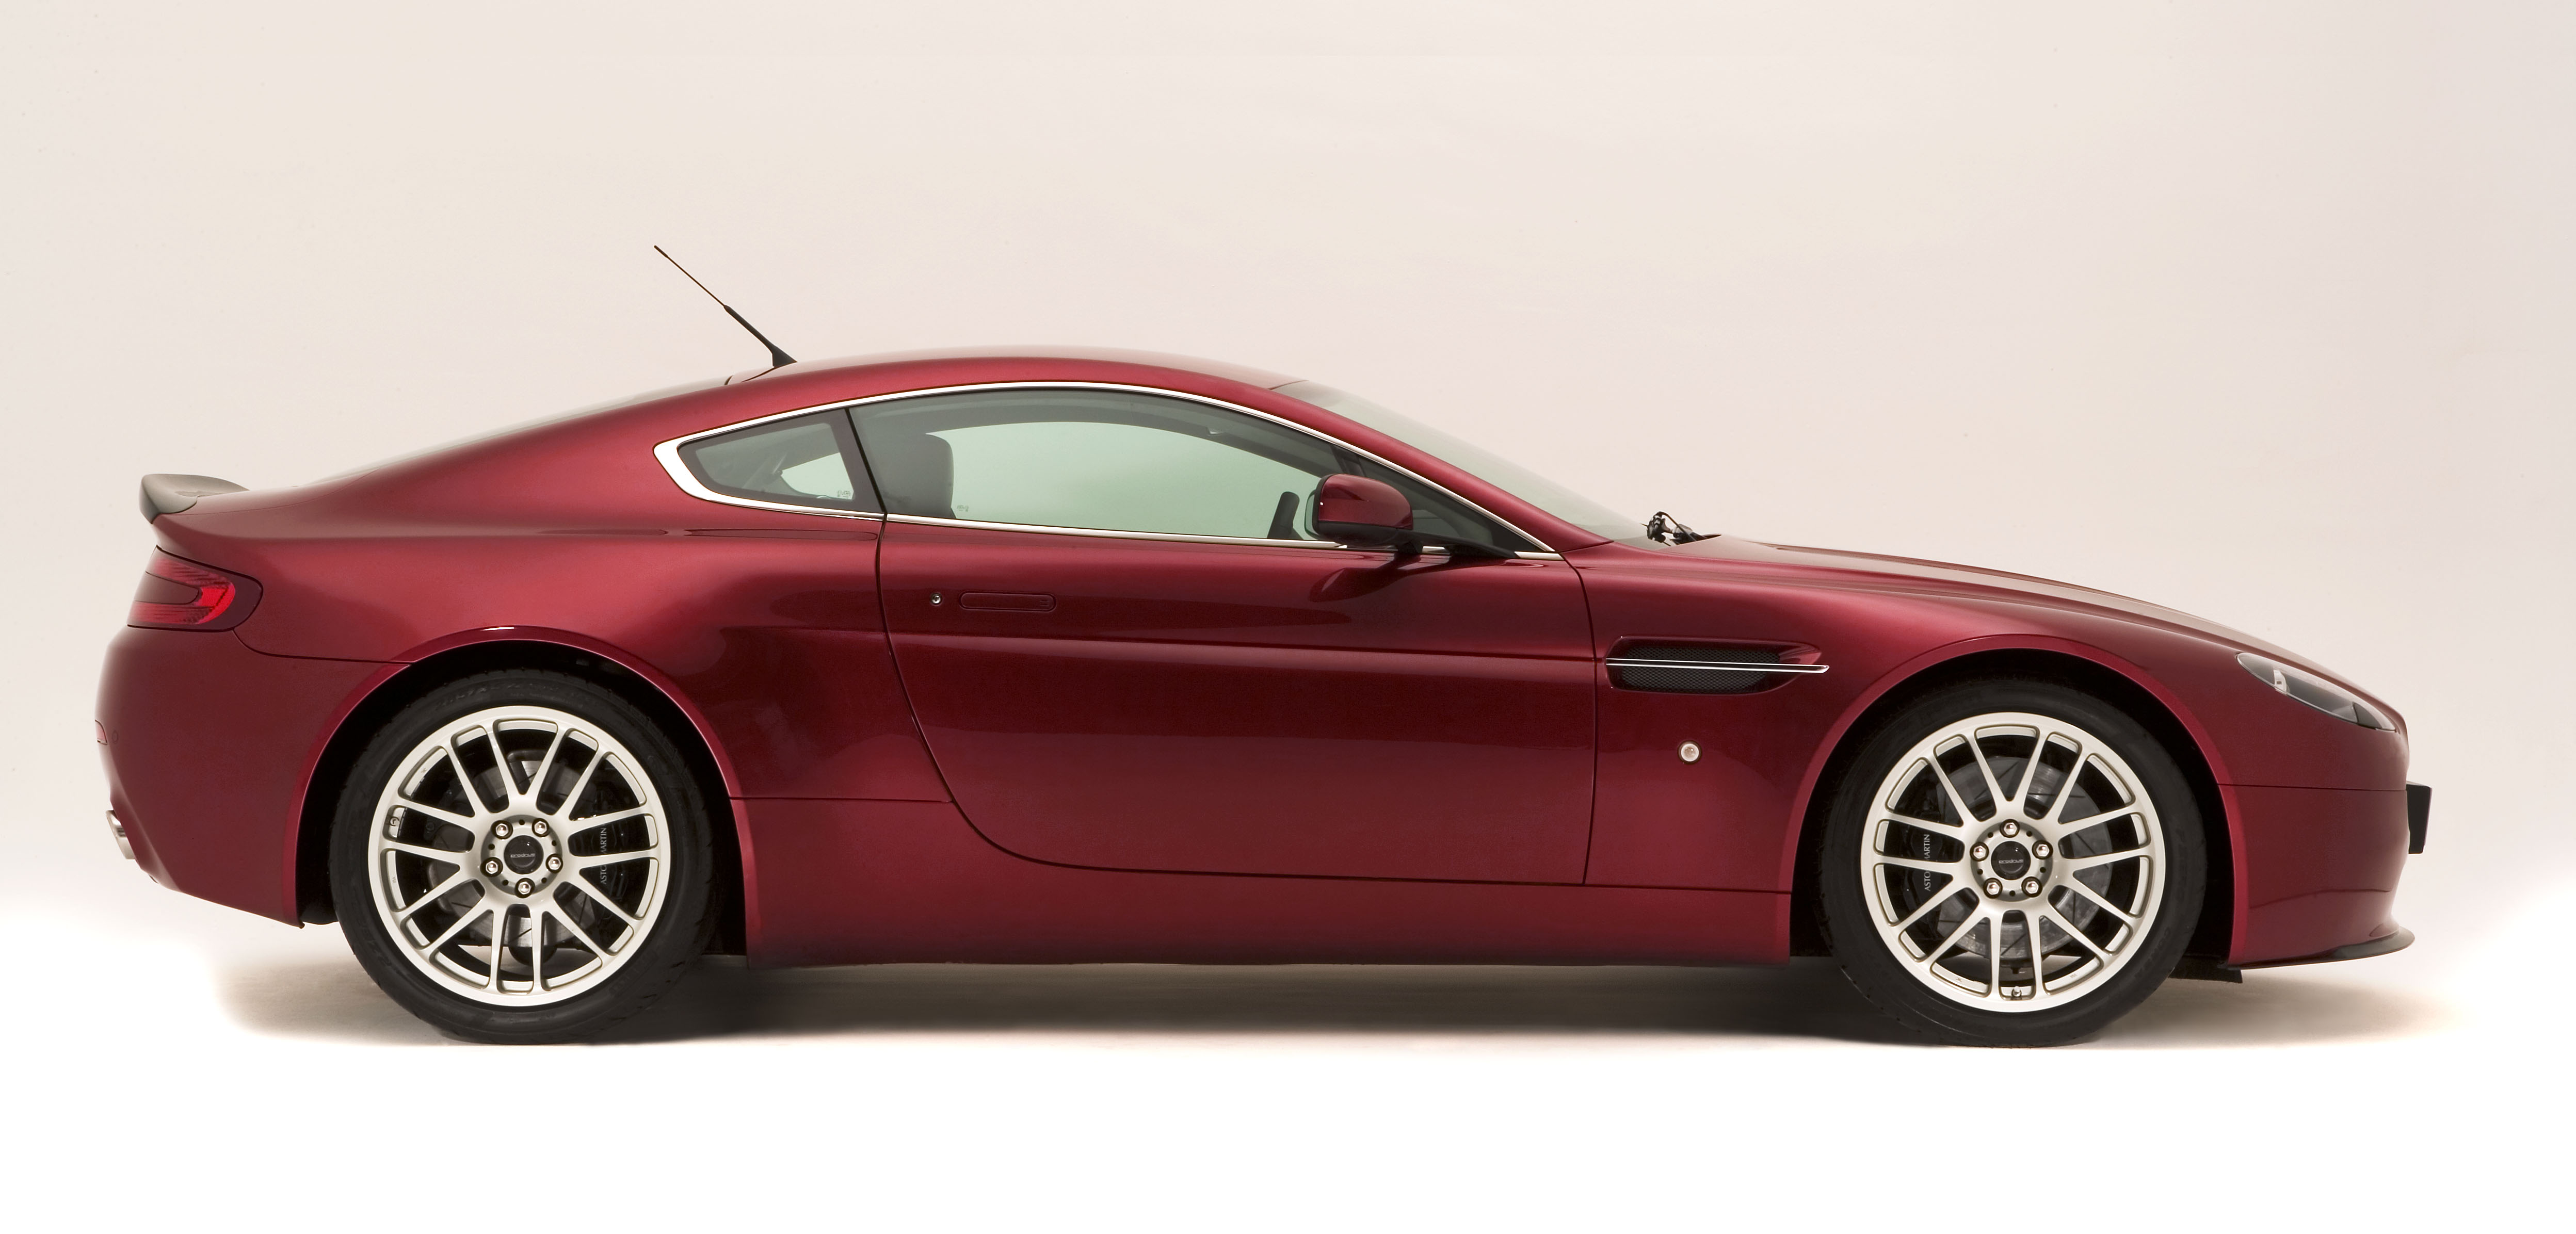 cars, Aston Martin, vehicles, tires, side view, Aston Martin V8 Vantage - desktop wallpaper